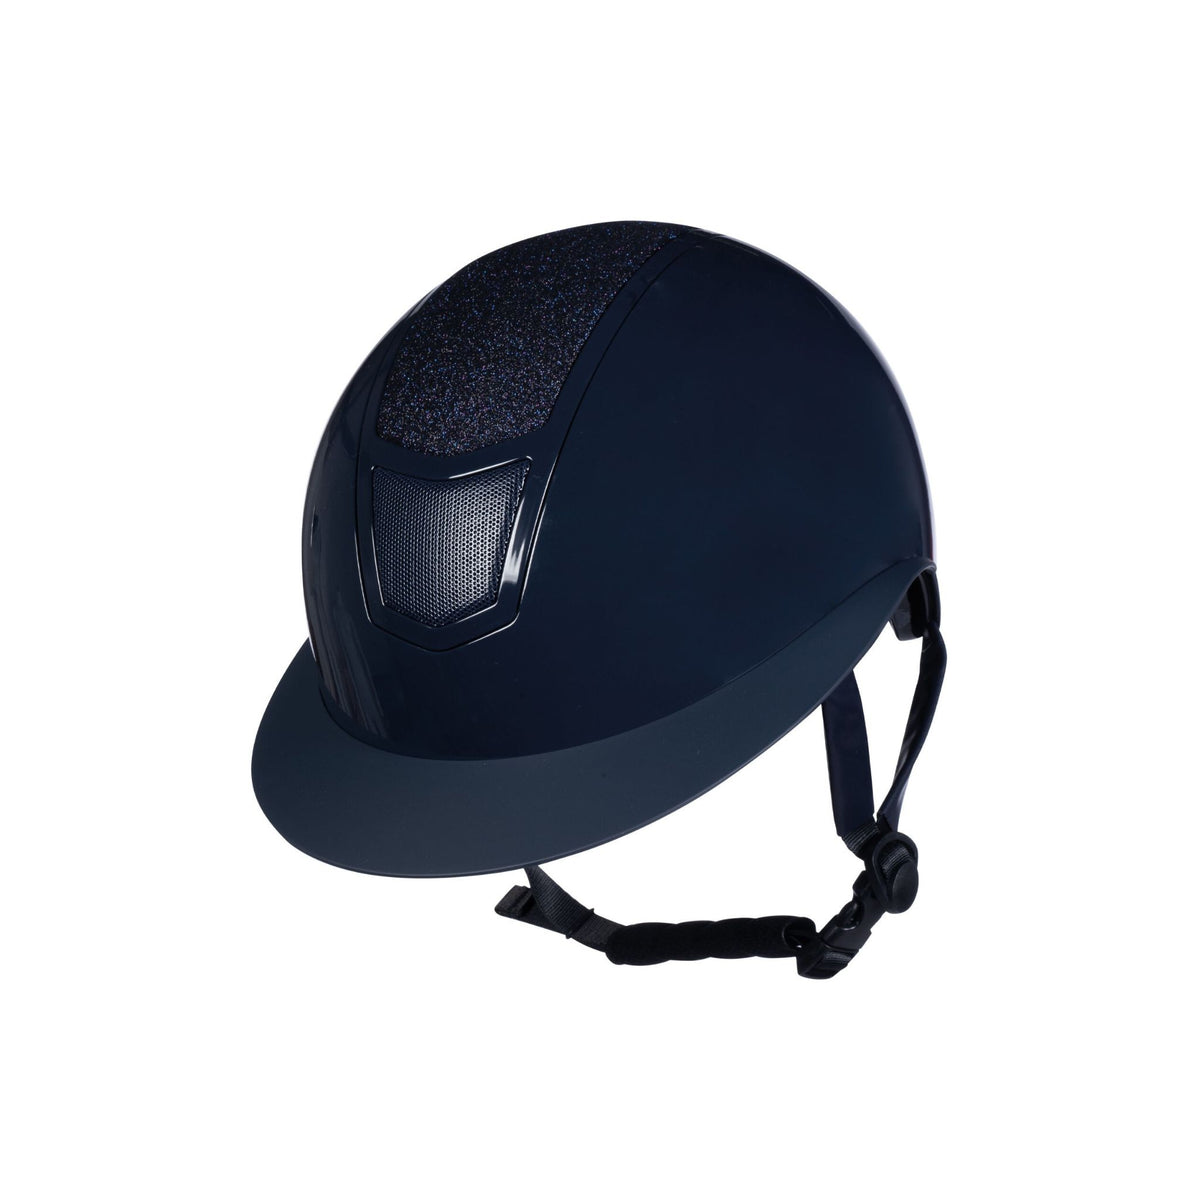 Navy shiny helmet with navy glitter and a wide visor